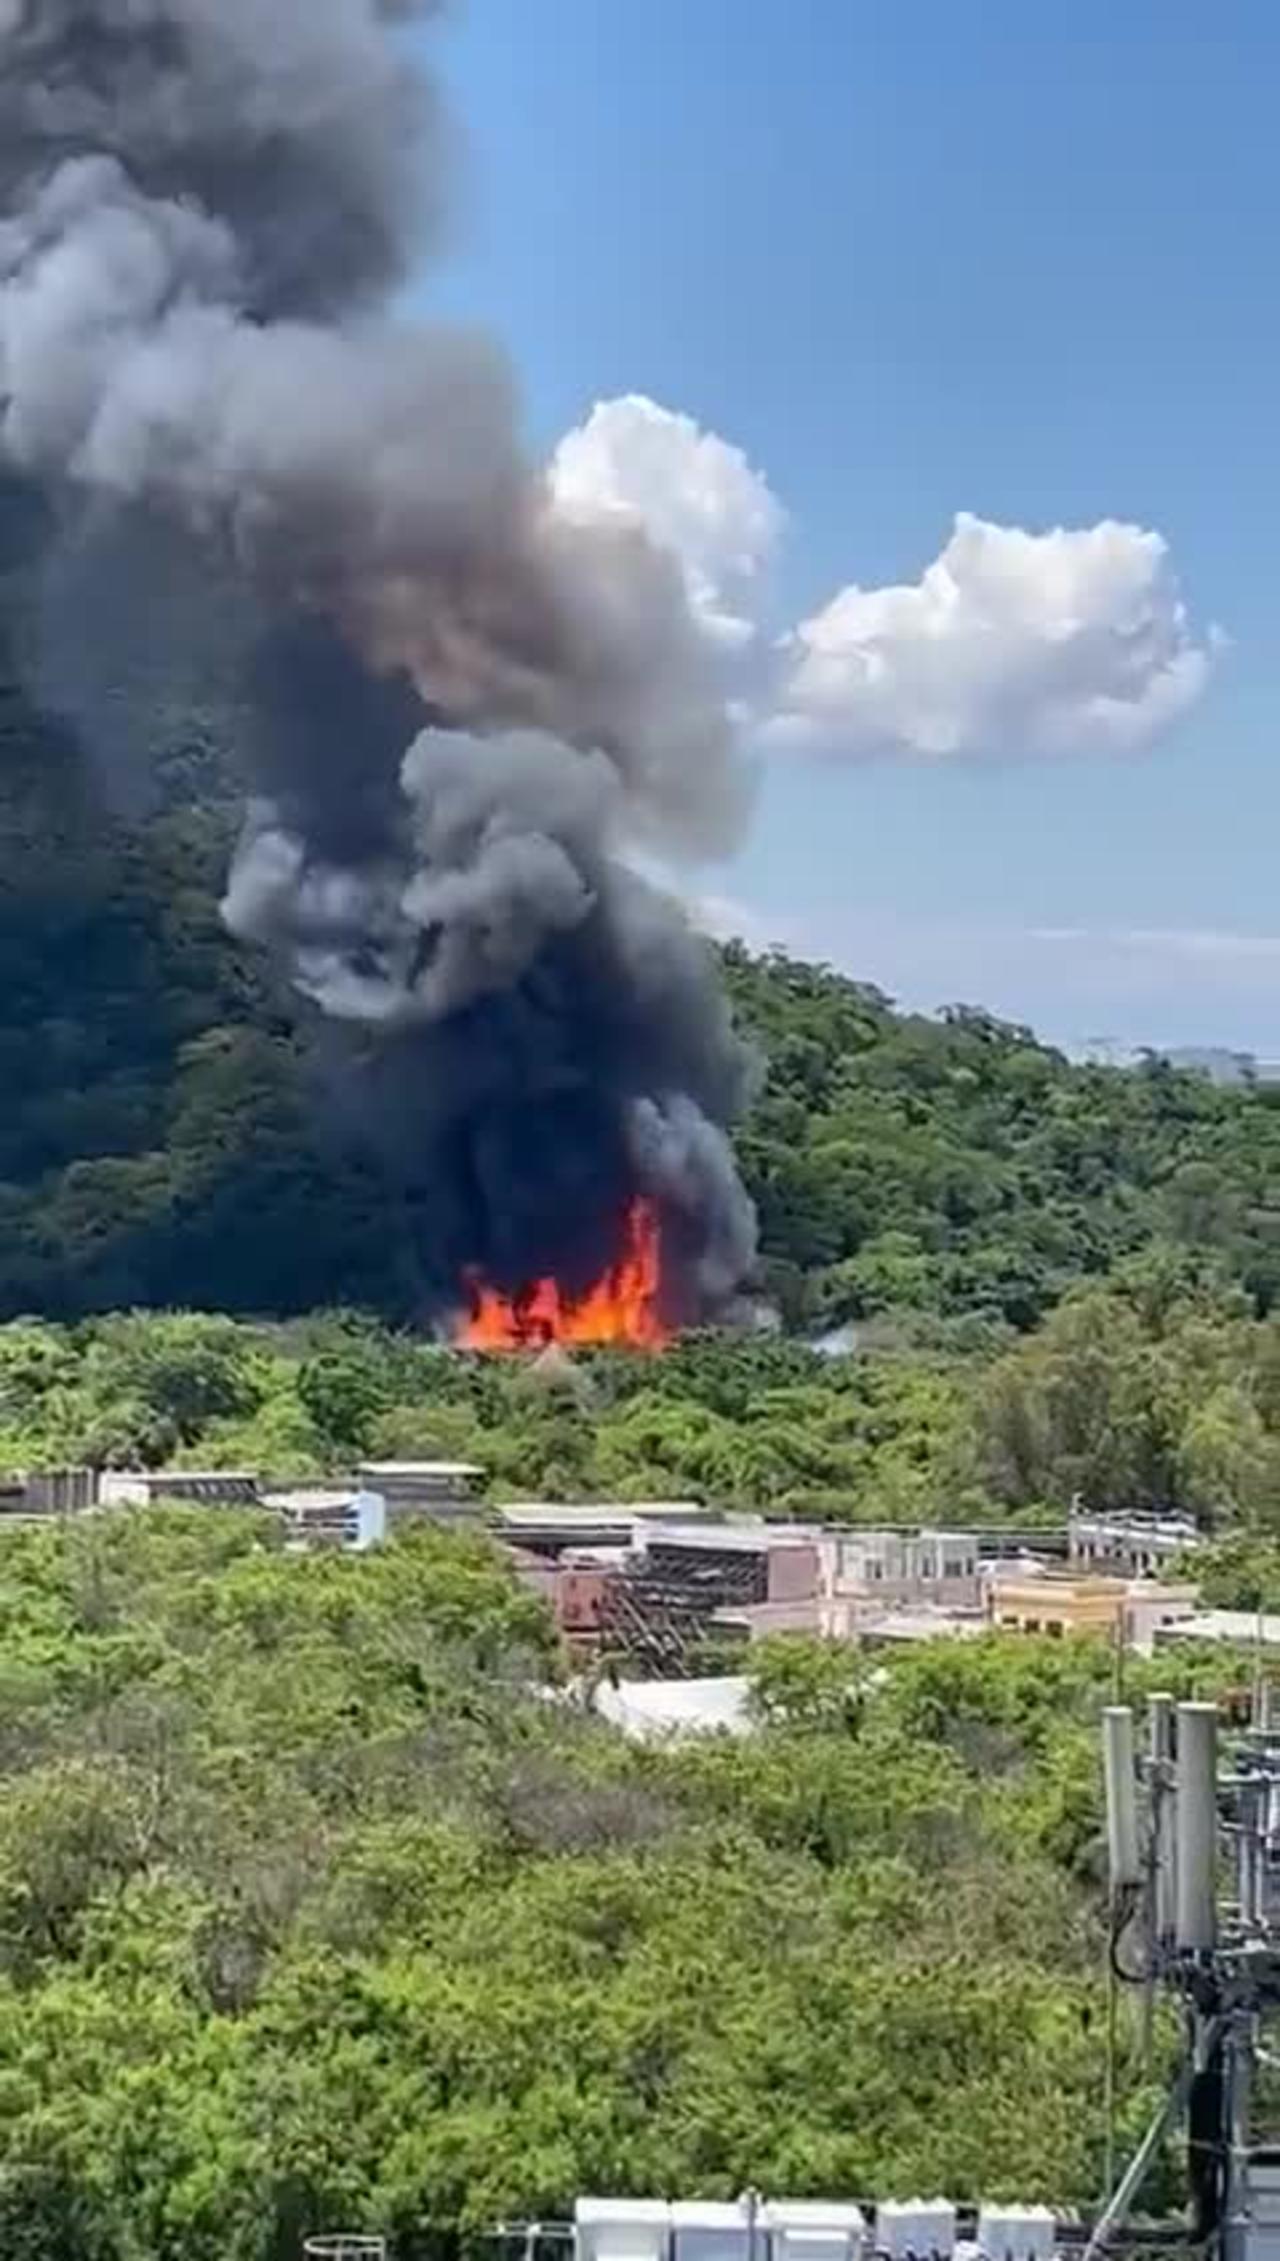 URGENT! Projac Rede Globo TV studio in flames - Rio de Janeiro 11/18/2022.